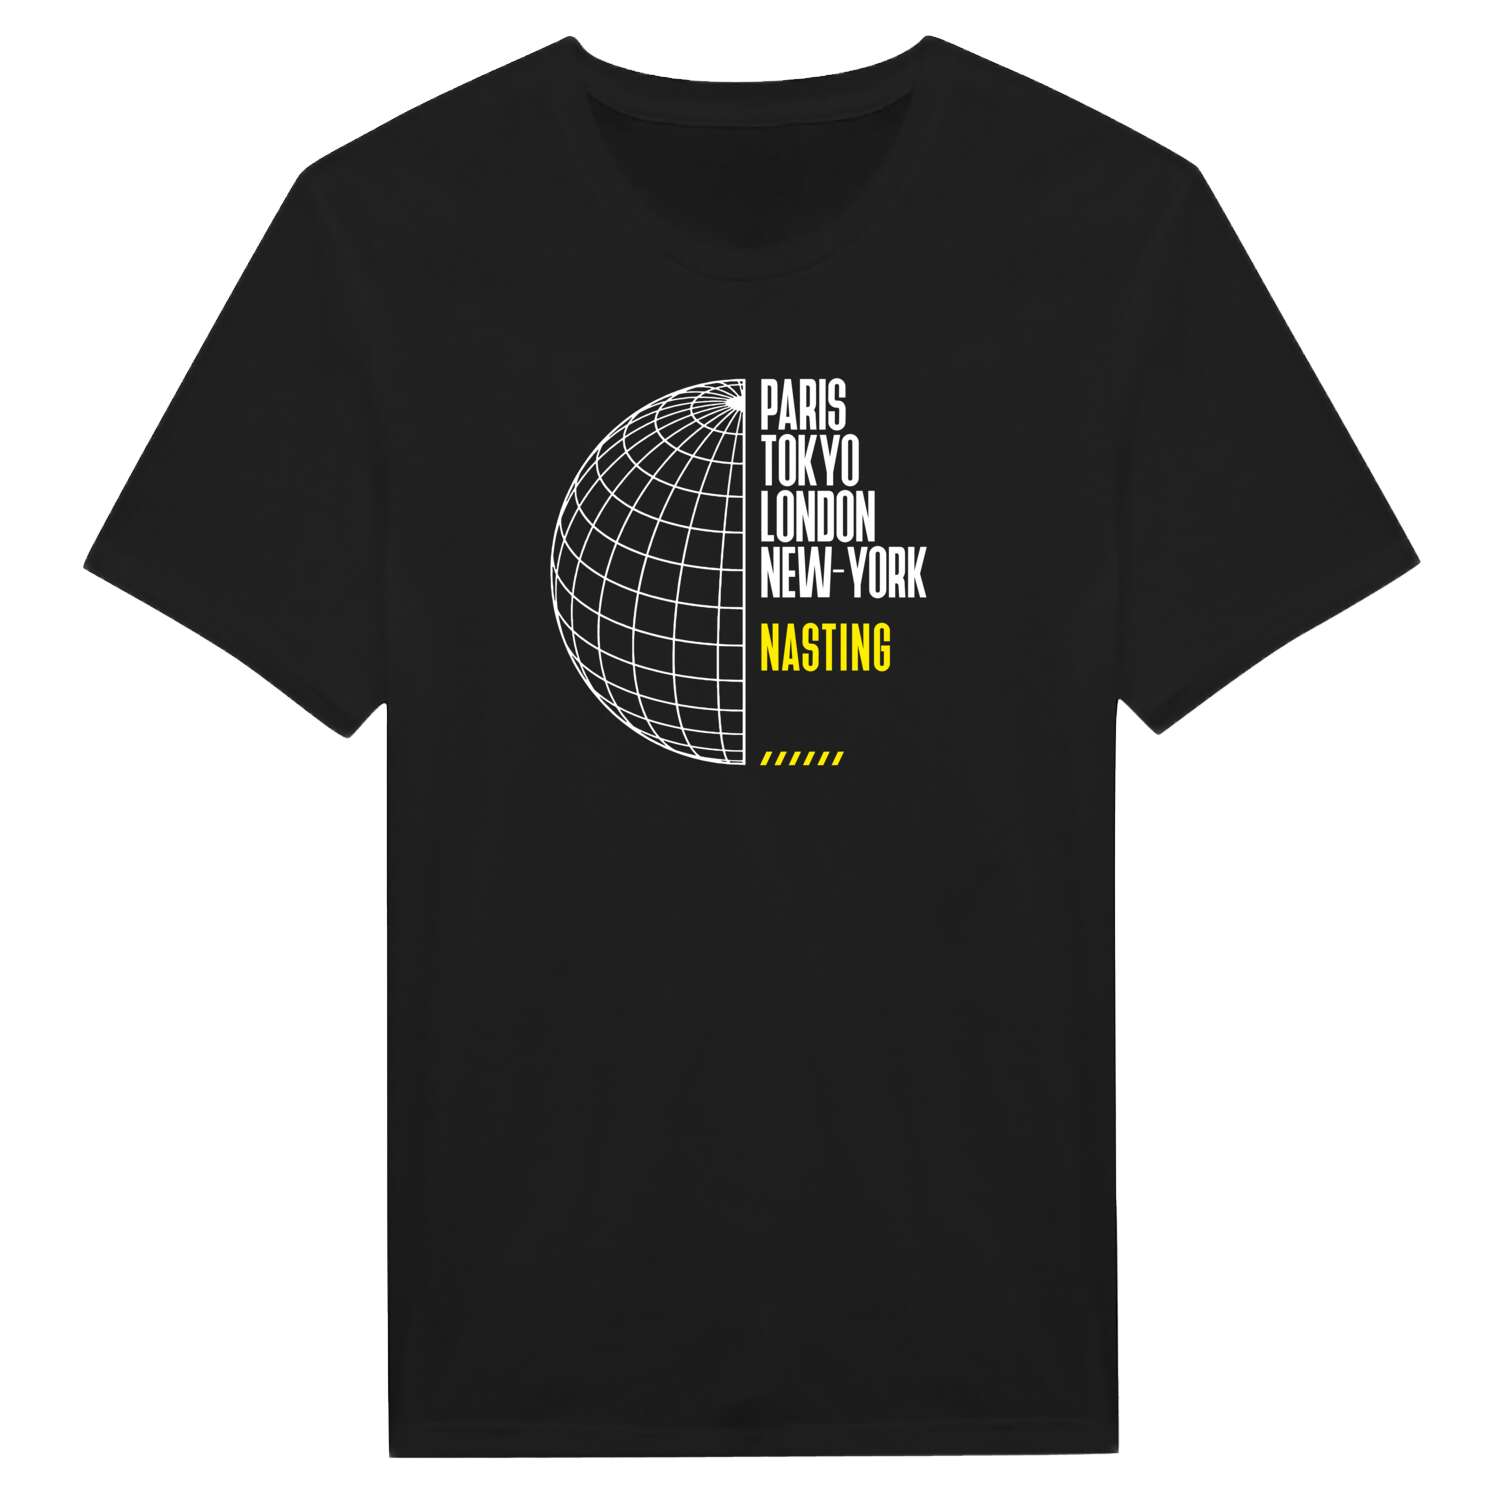 Nasting T-Shirt »Paris Tokyo London«